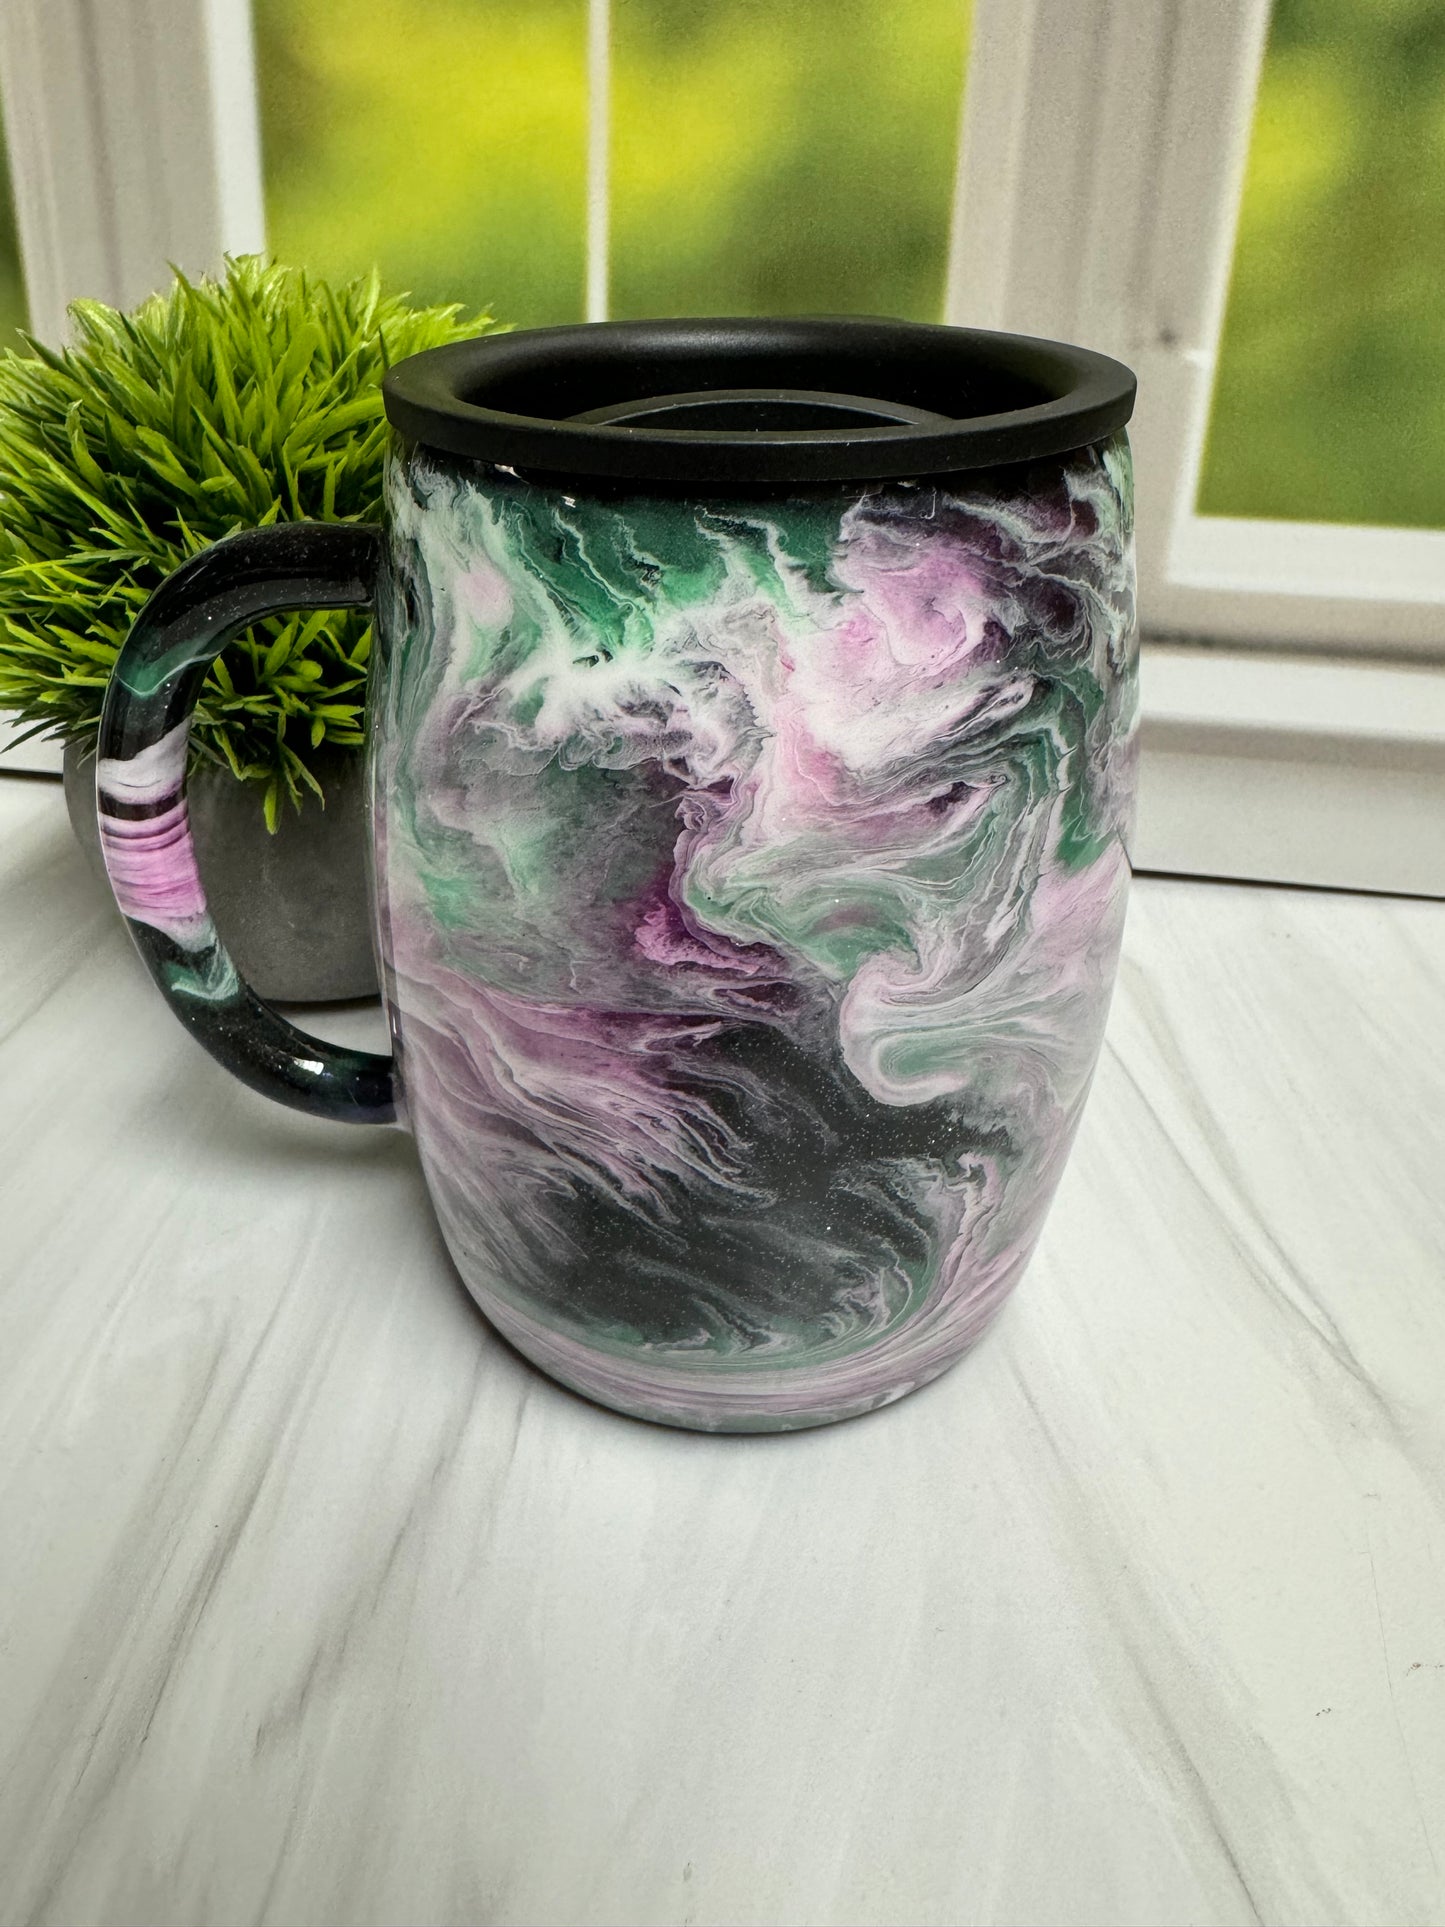 Stainless Steel Coffee Mug - black with pink green white swirls - 14 oz